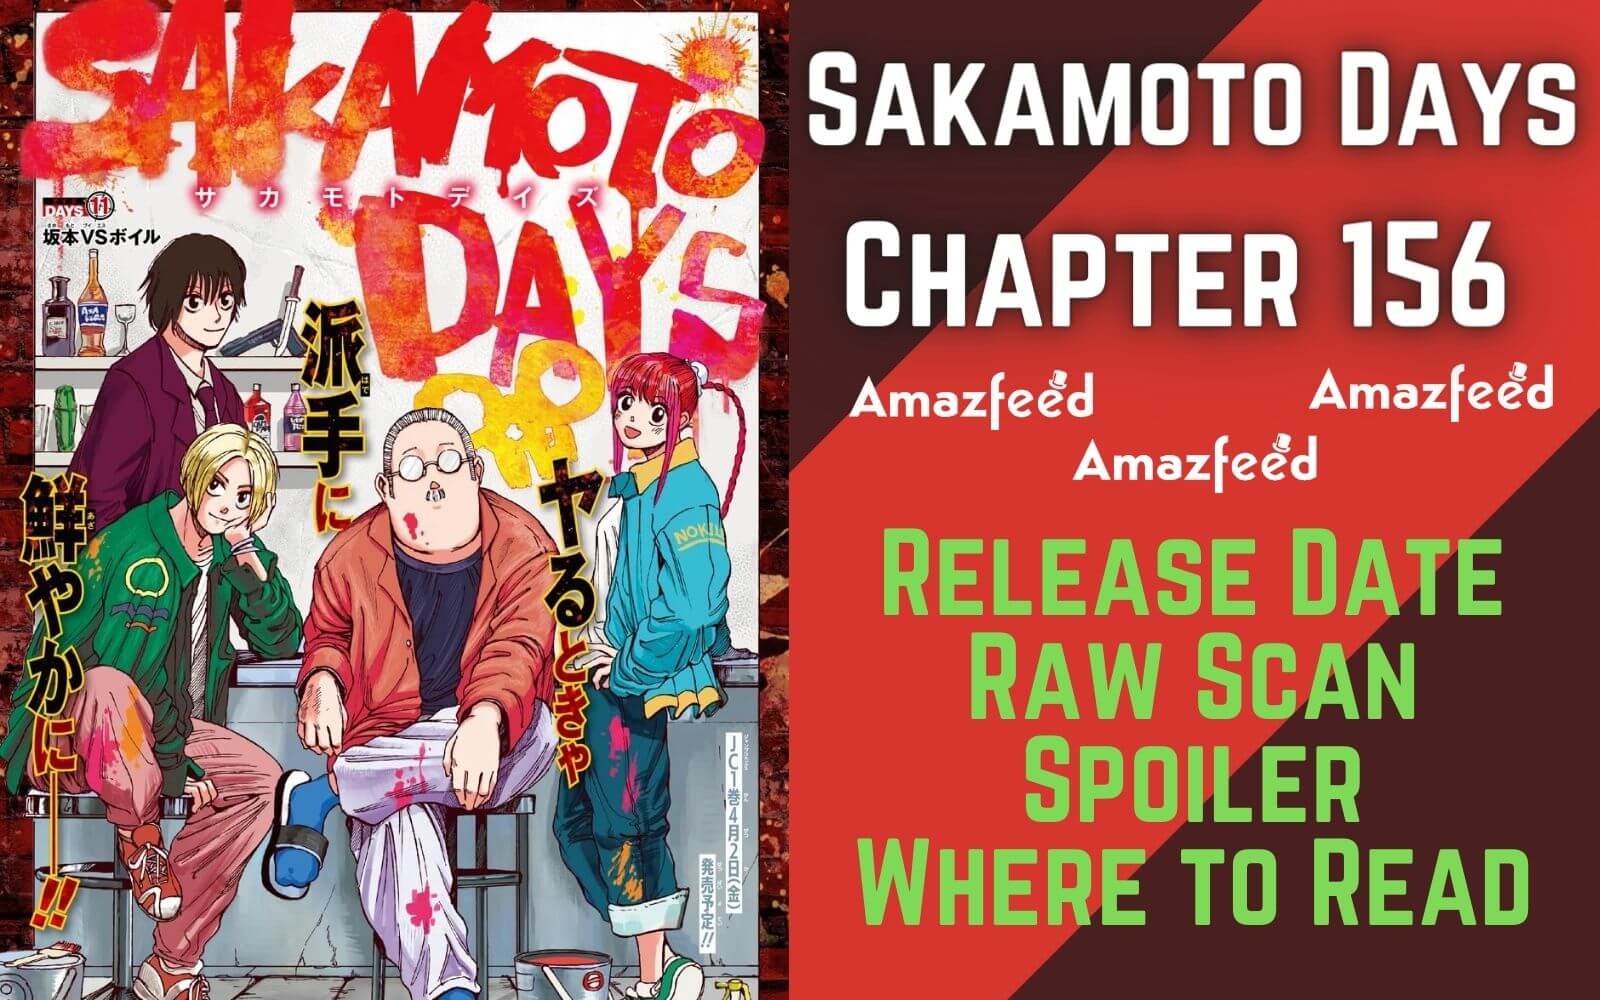 Sakamoto Days Chapter 156 Spoiler, Recap, Raw Scan & Where to Read